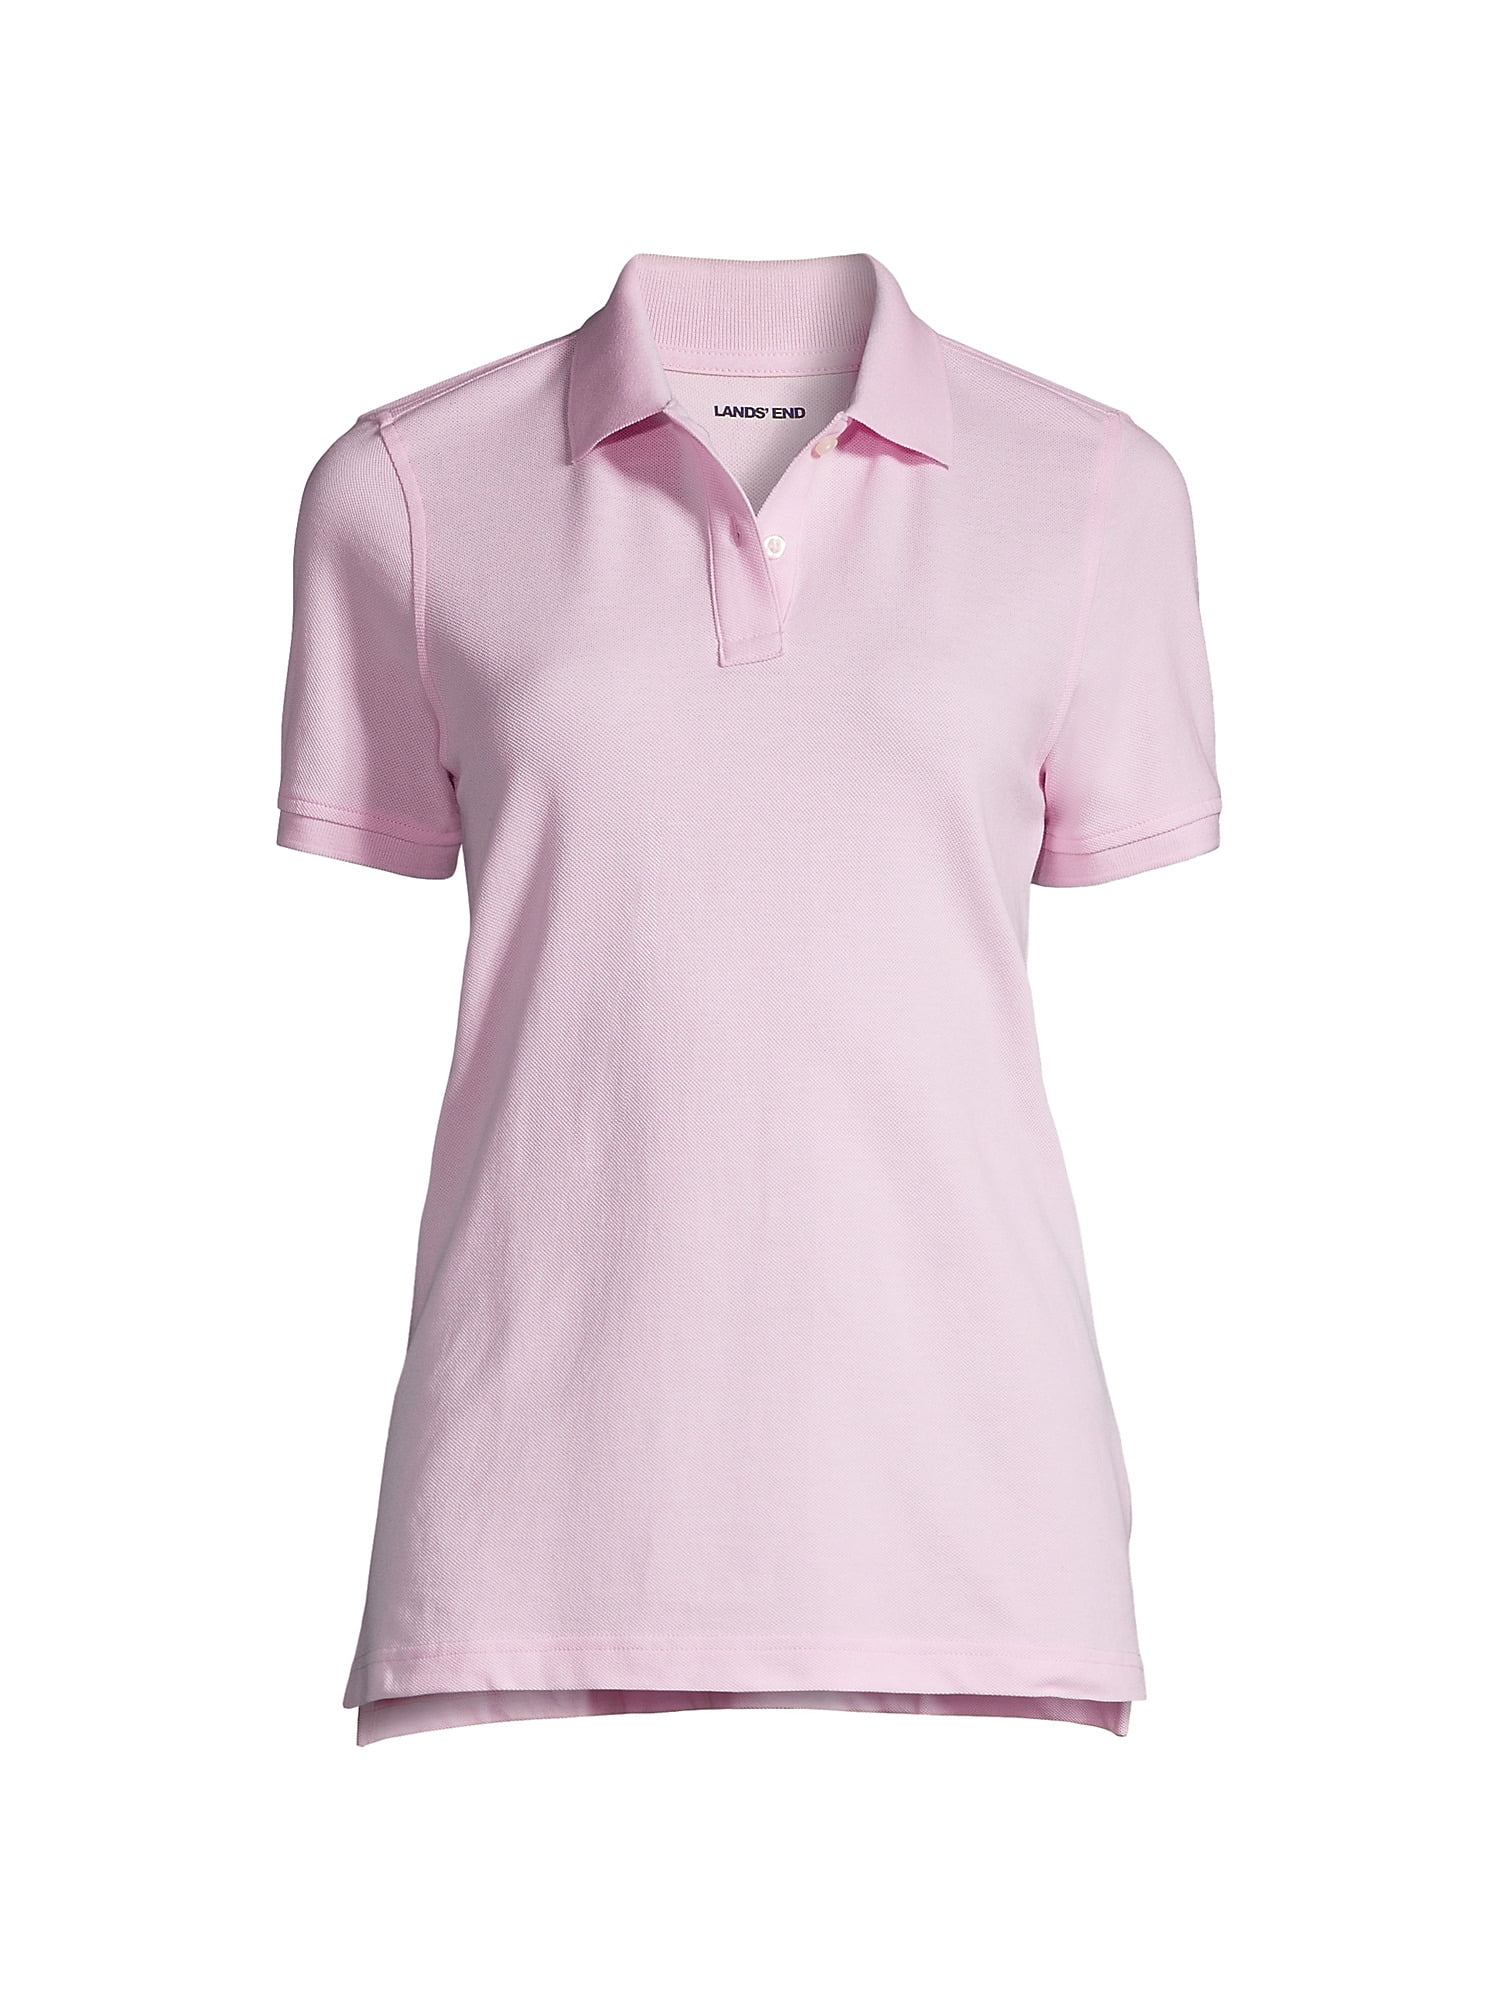 Lands' End School Uniform Women's Short Sleeve Mesh Polo Shirt 